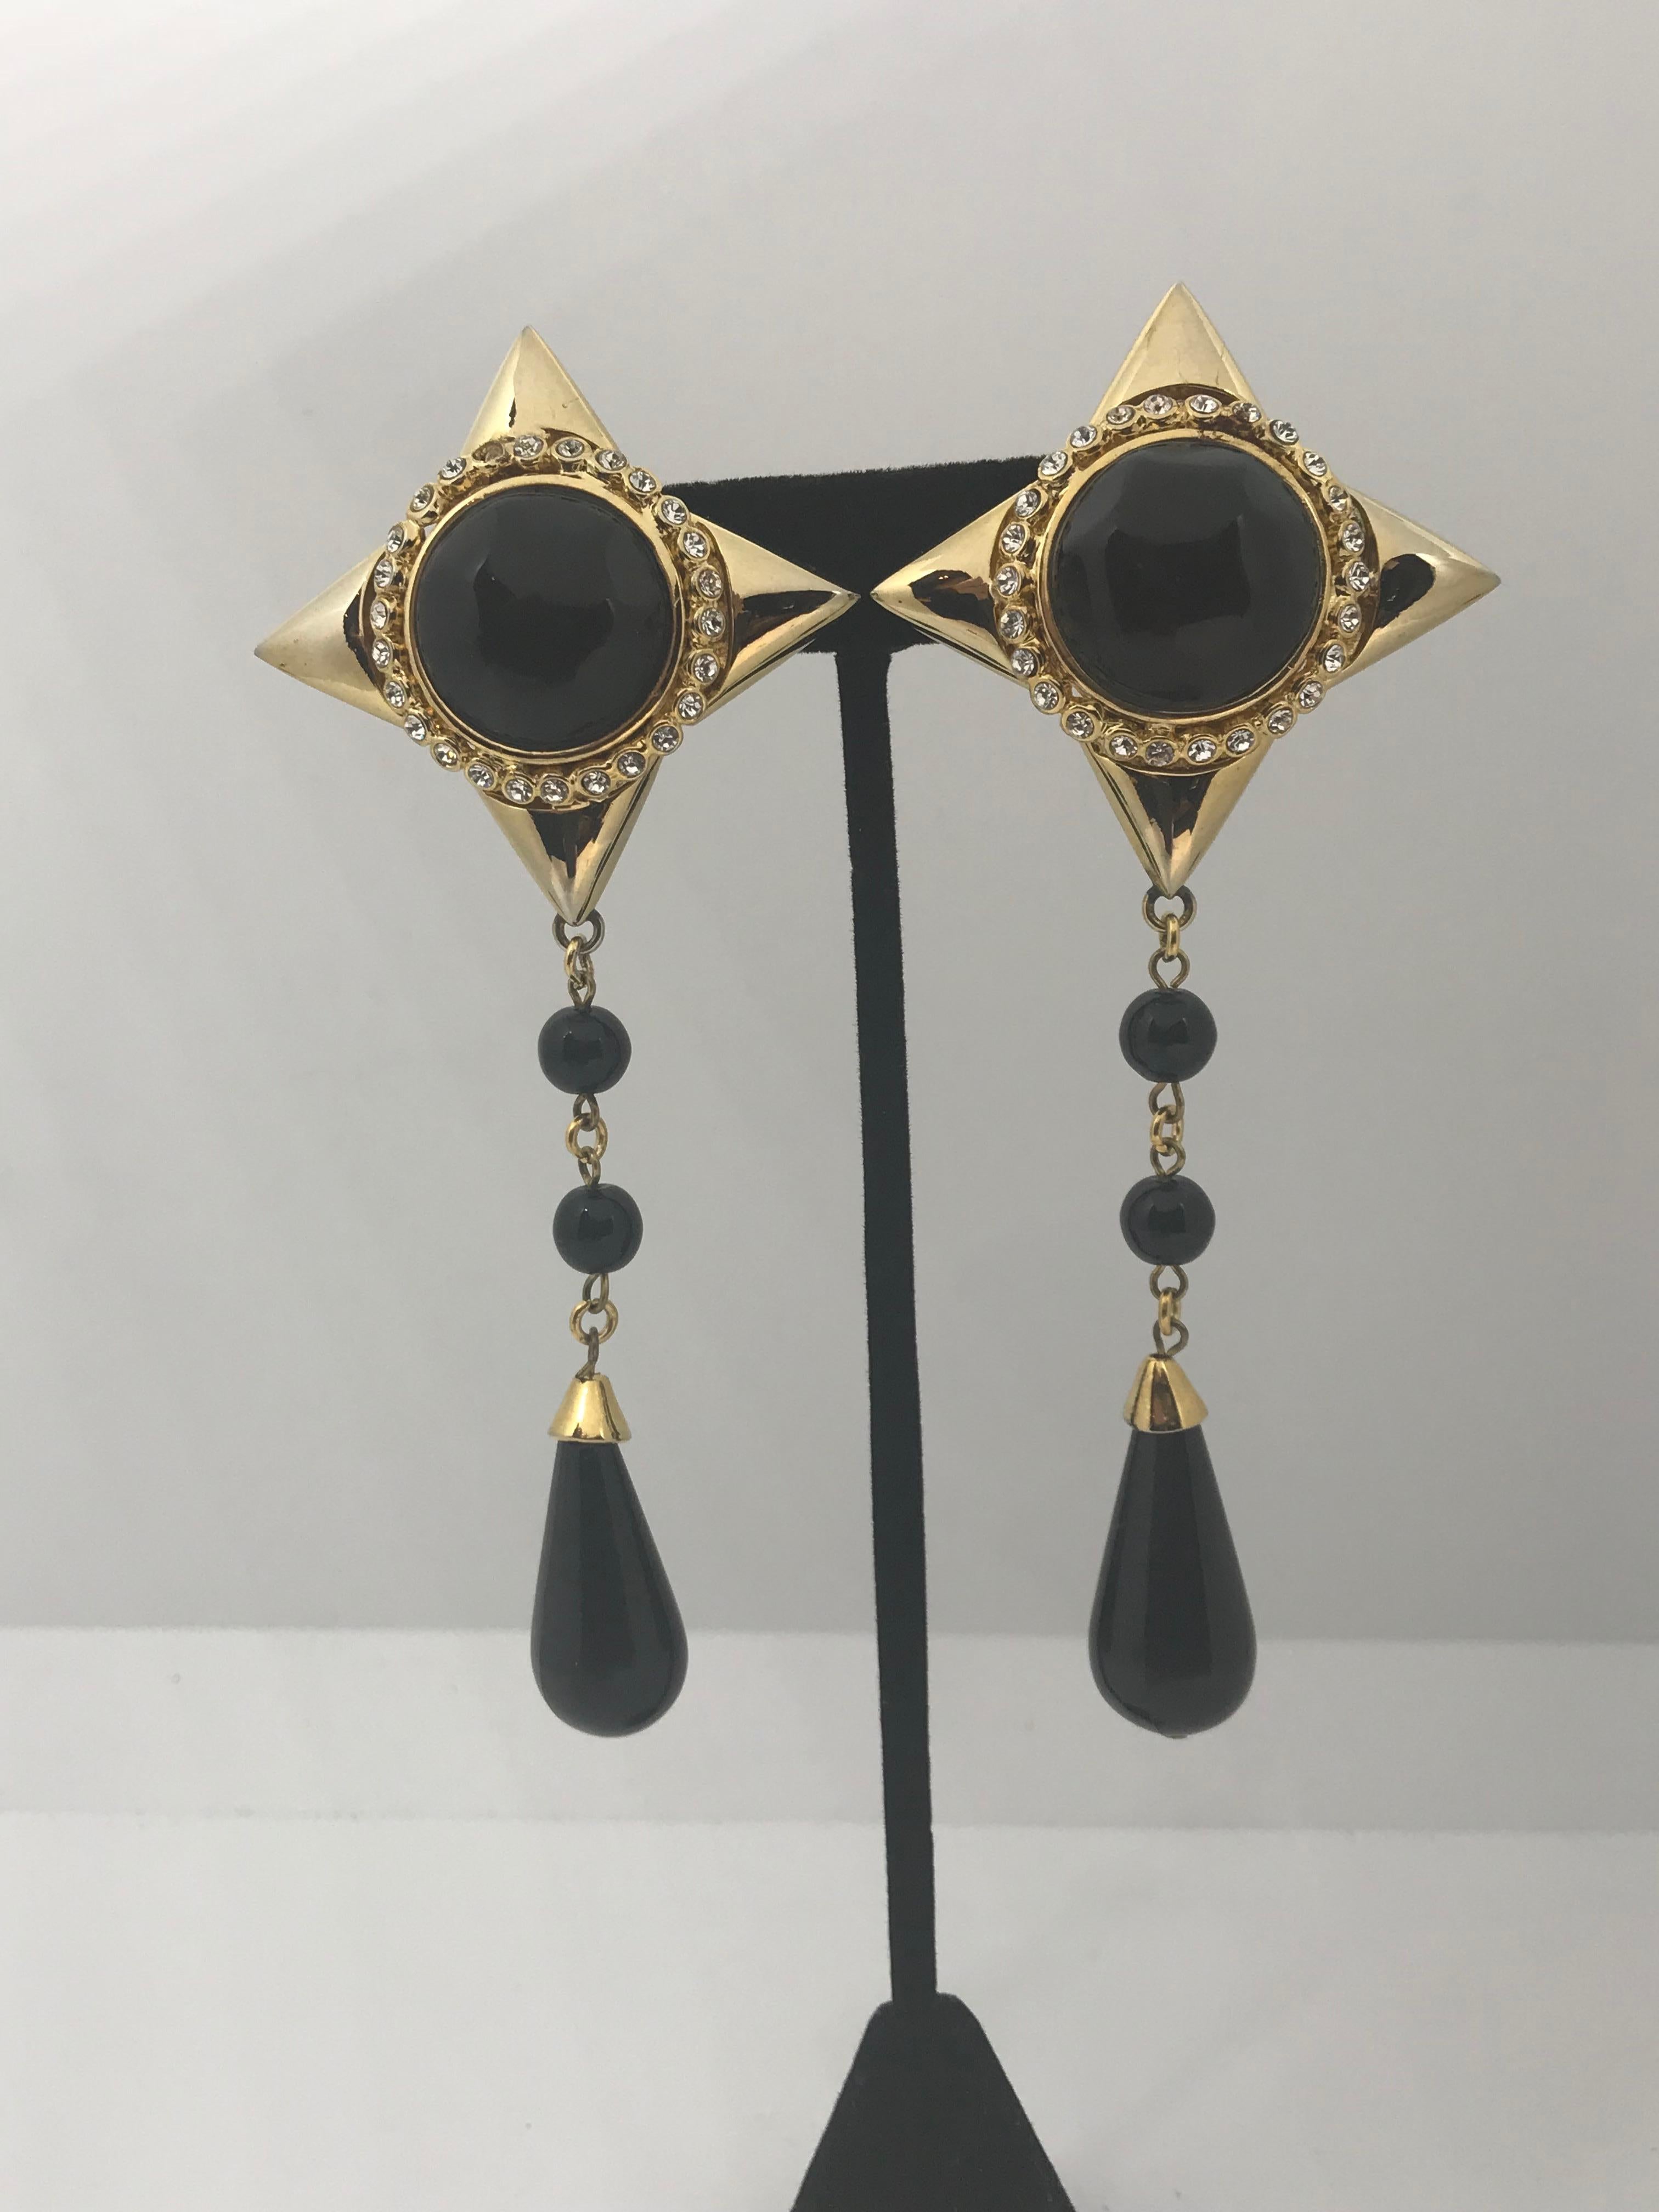 Modern De Liguoro 1980s pendant earrings from Elsa Martinelli's collection